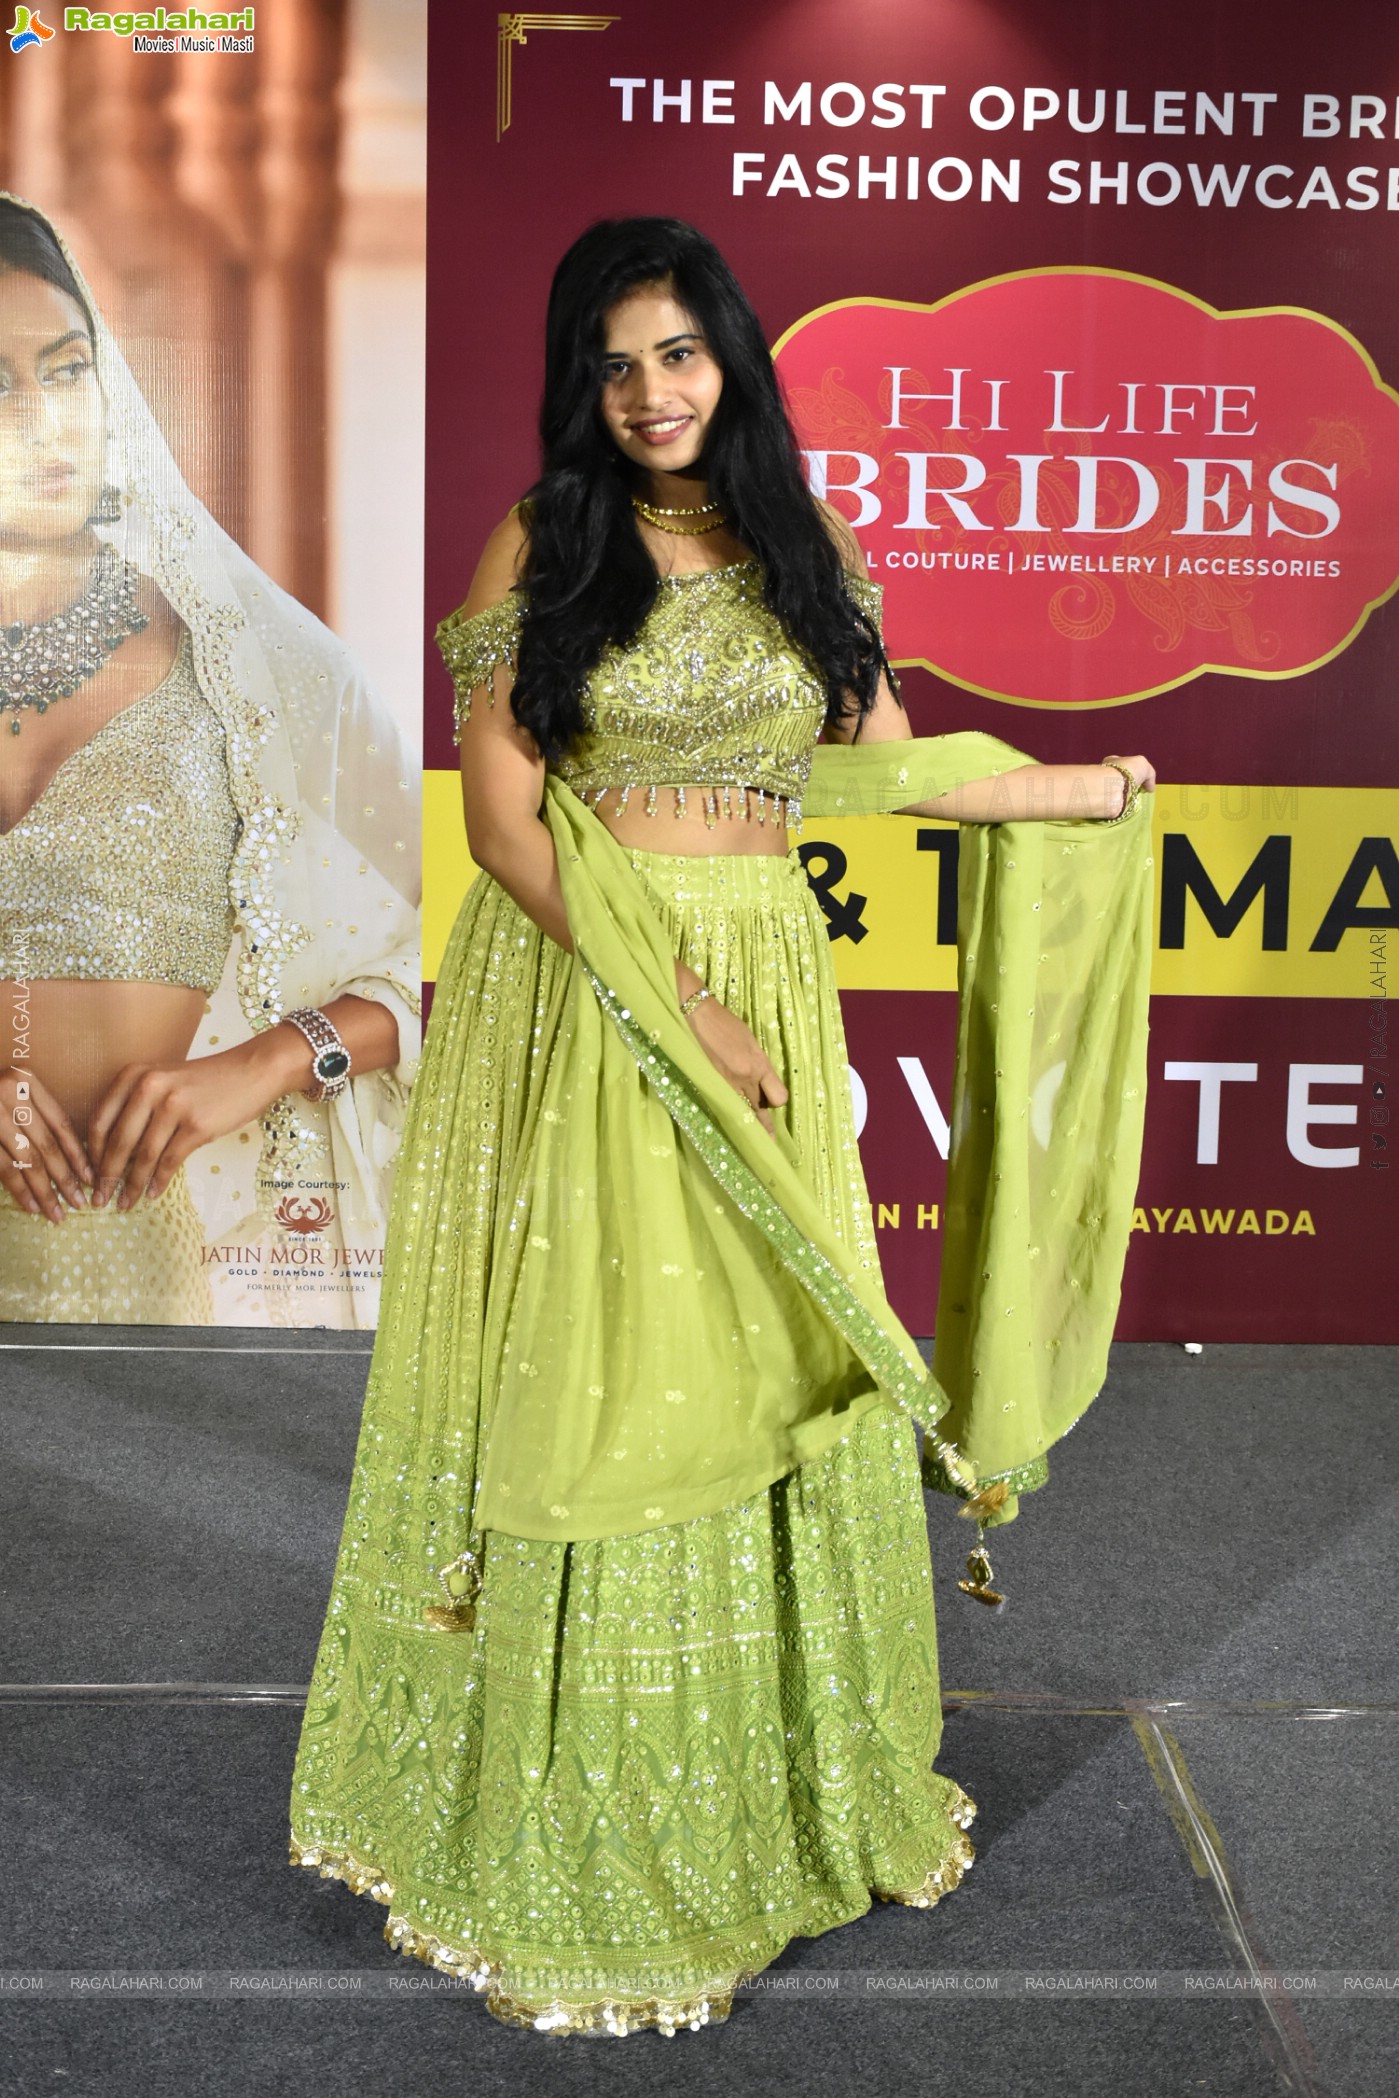 Hilife Brides Vijayawada May 2022 Curtain Raiser and Fashion Showcase